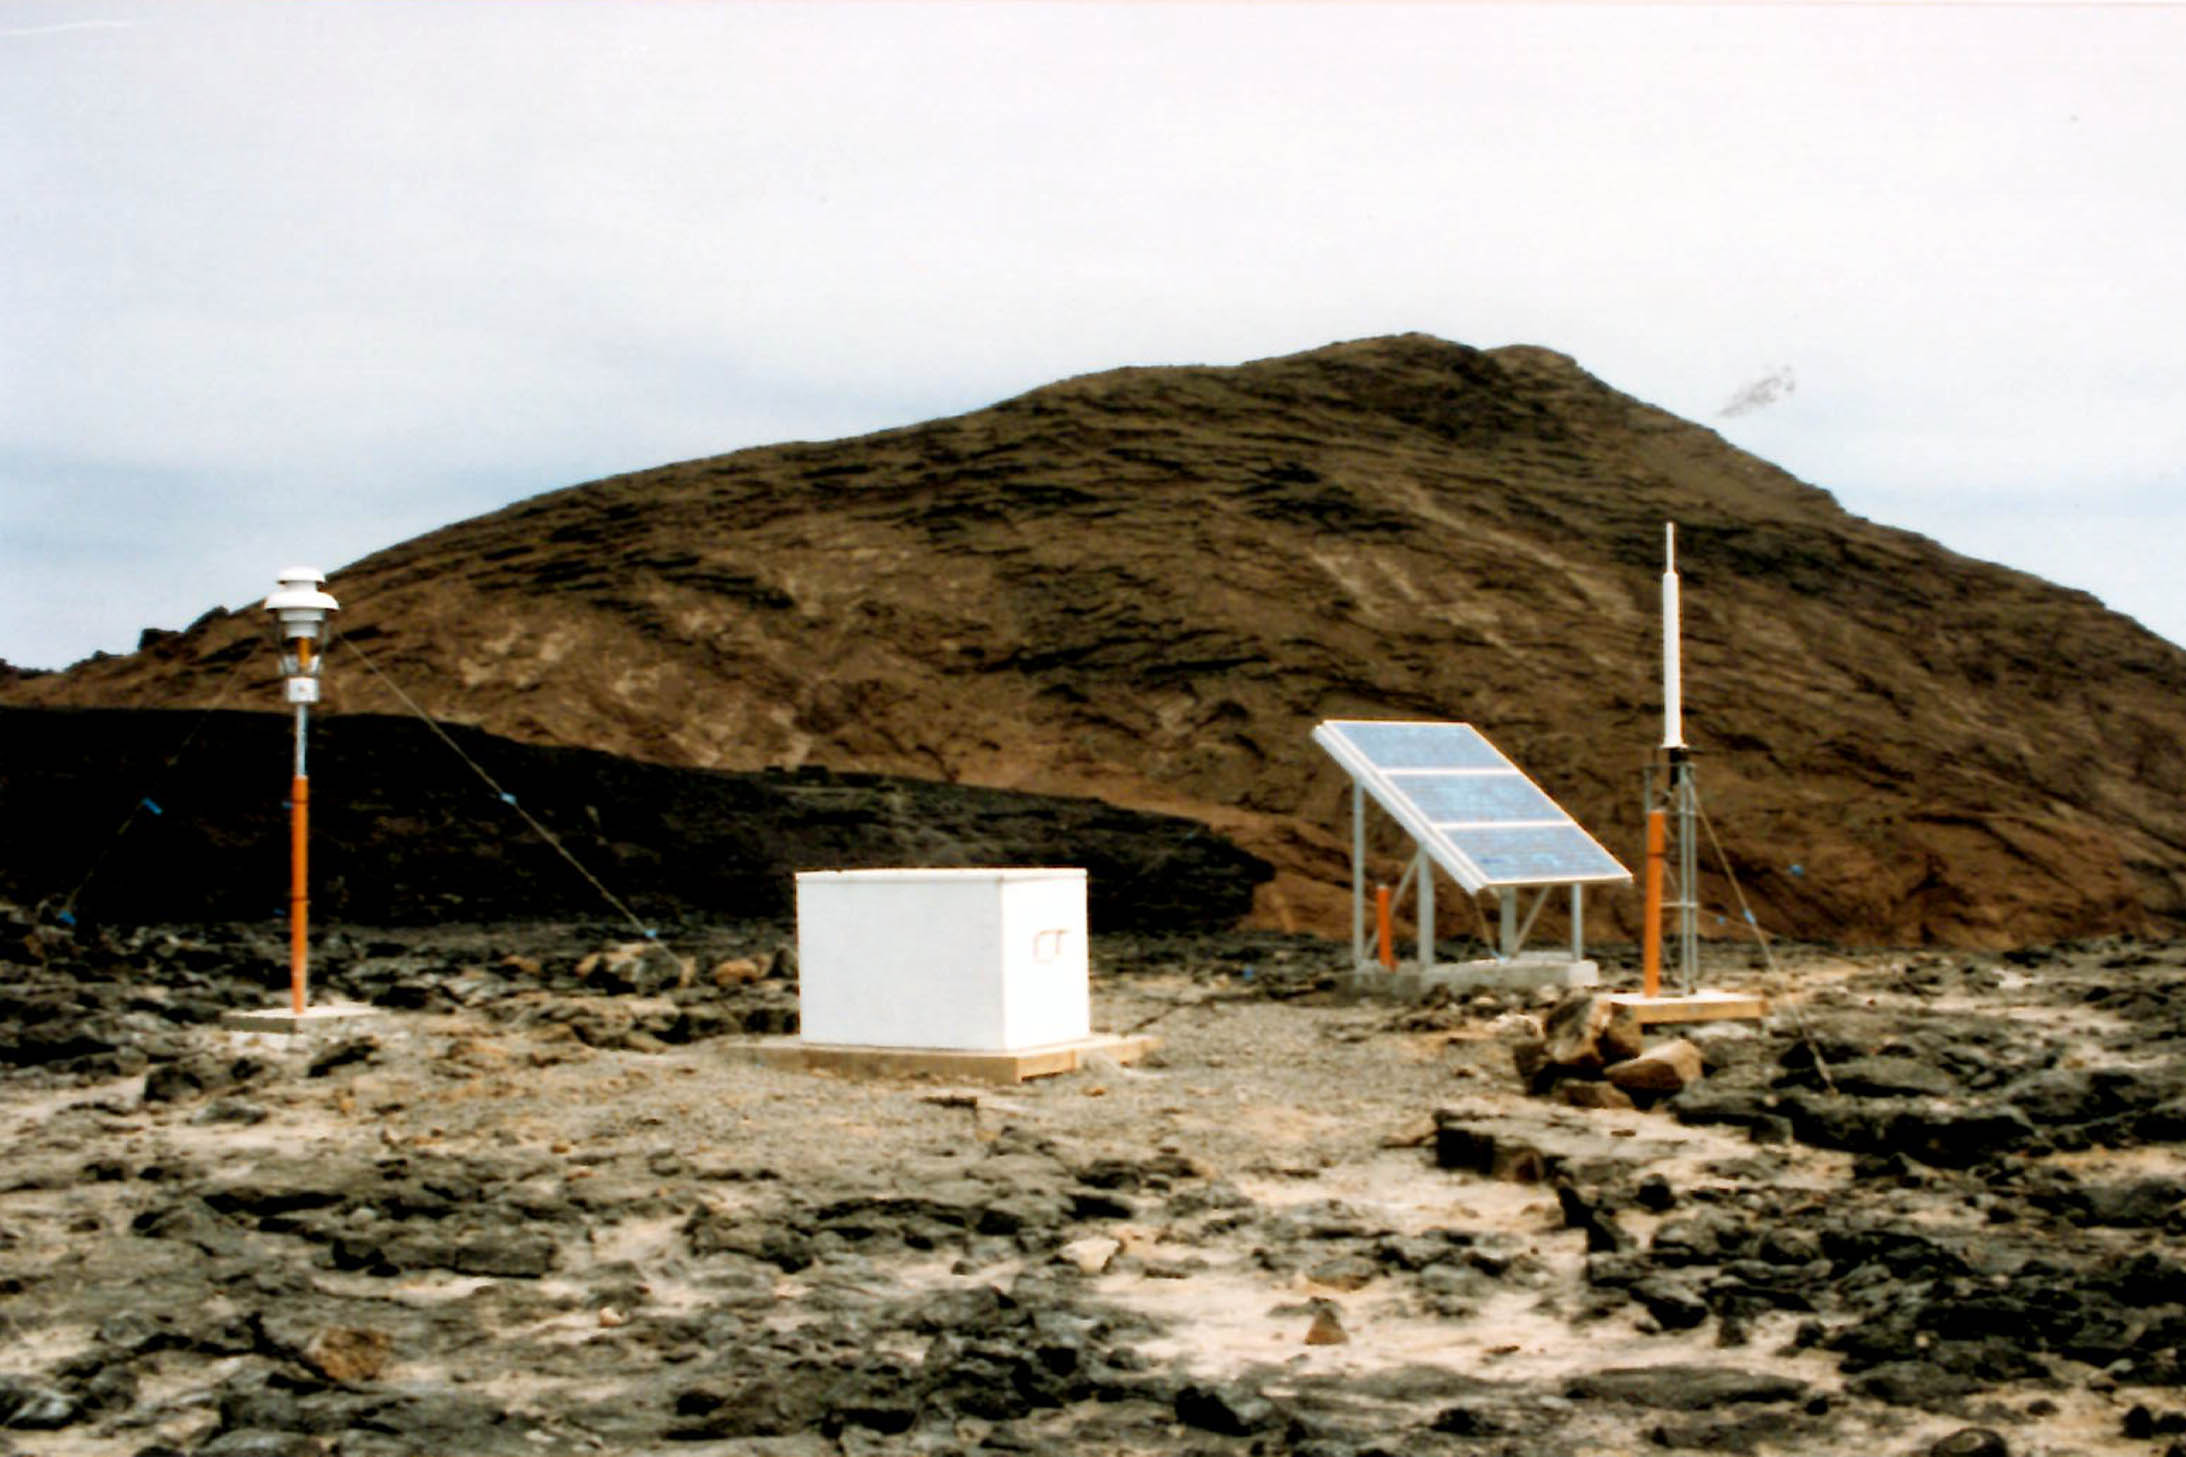 DORIS station: SAN FELIX ISLAND - CHILE